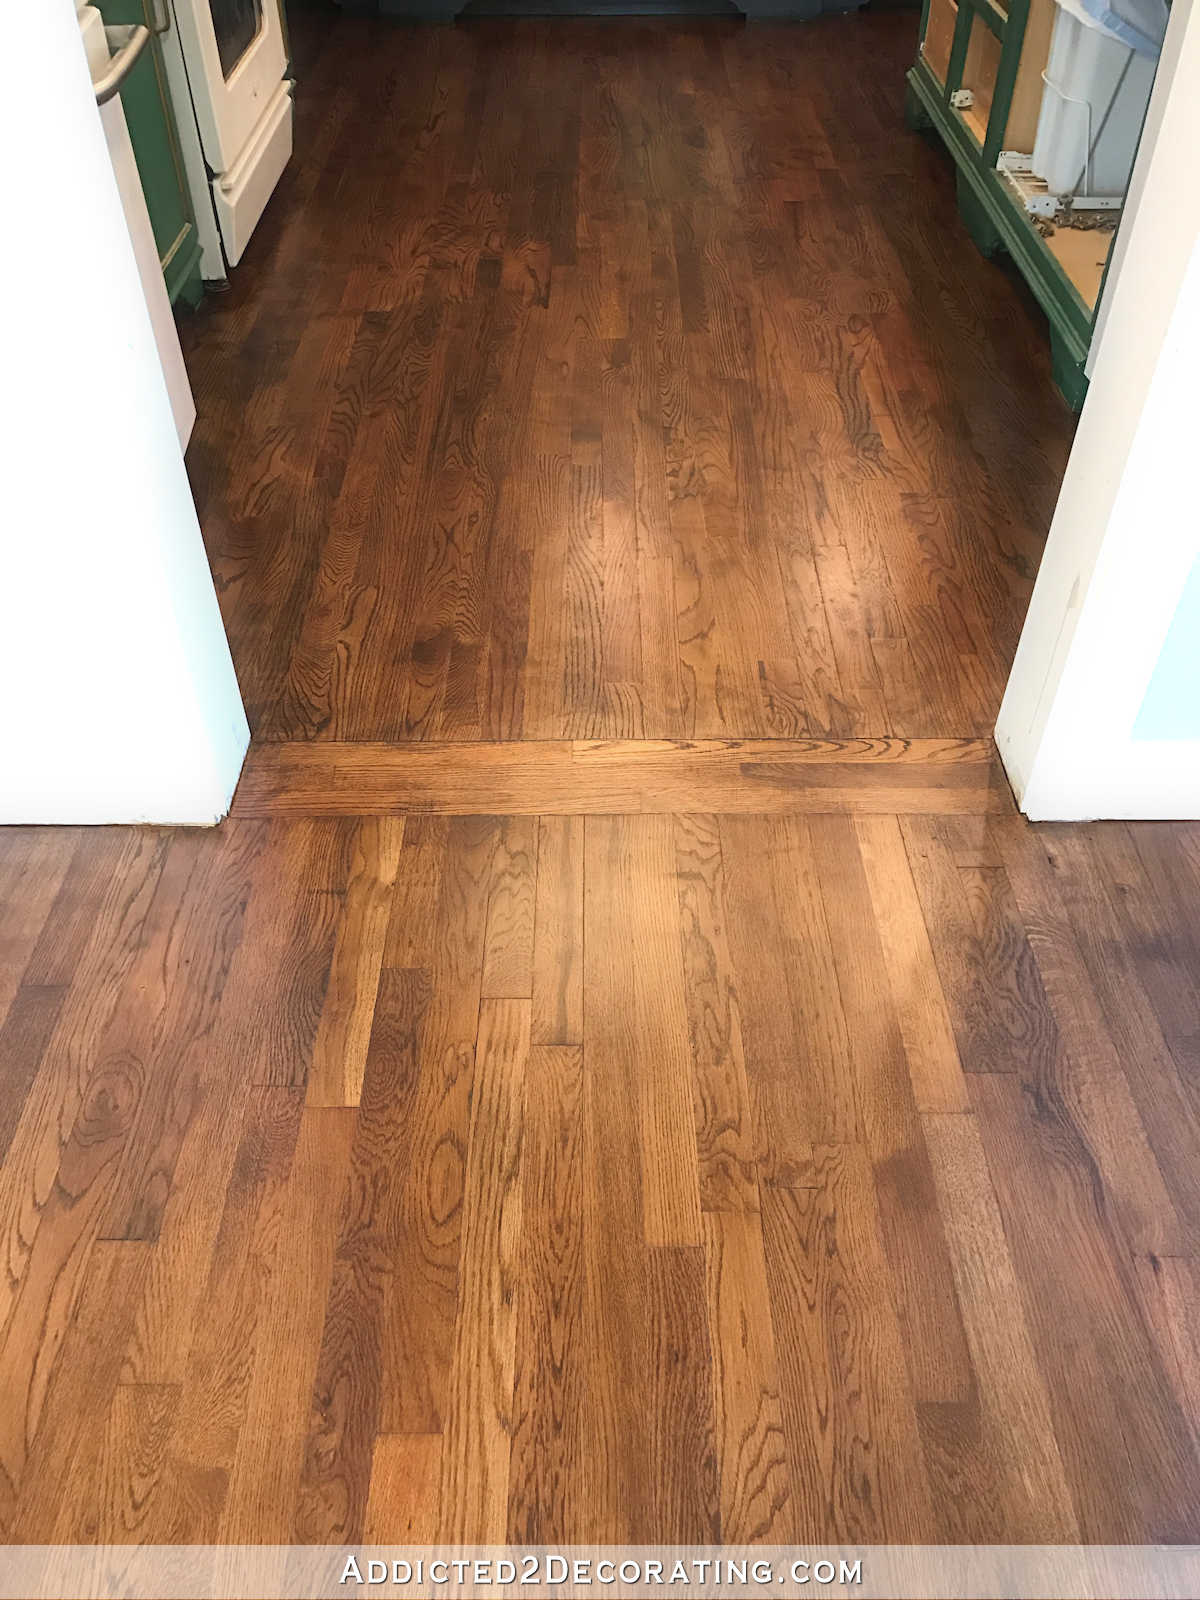 refinished red oak hardwood floors - living room and kitchen